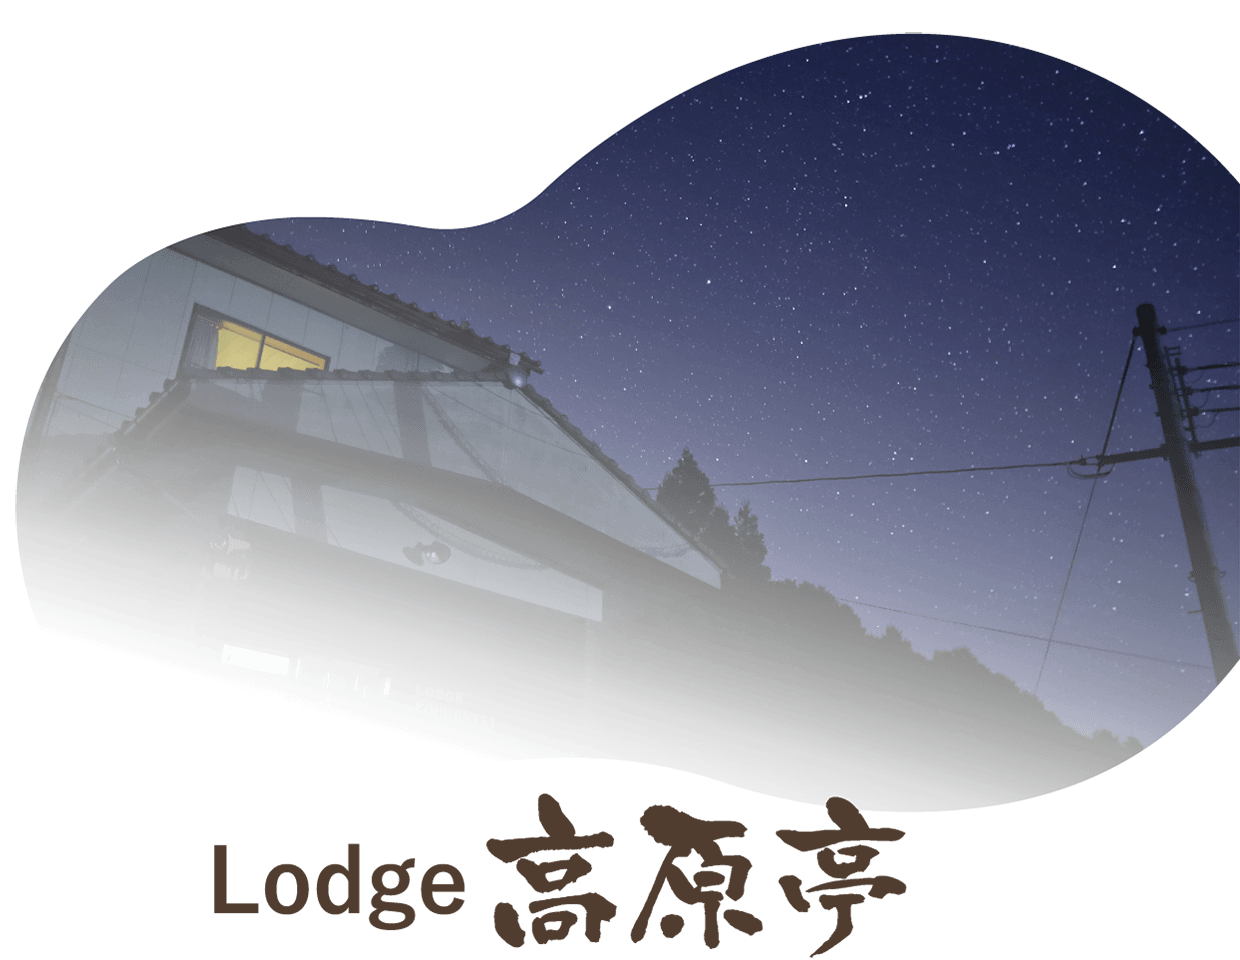 Lodge 高原亭 Loged KOUGENTEI